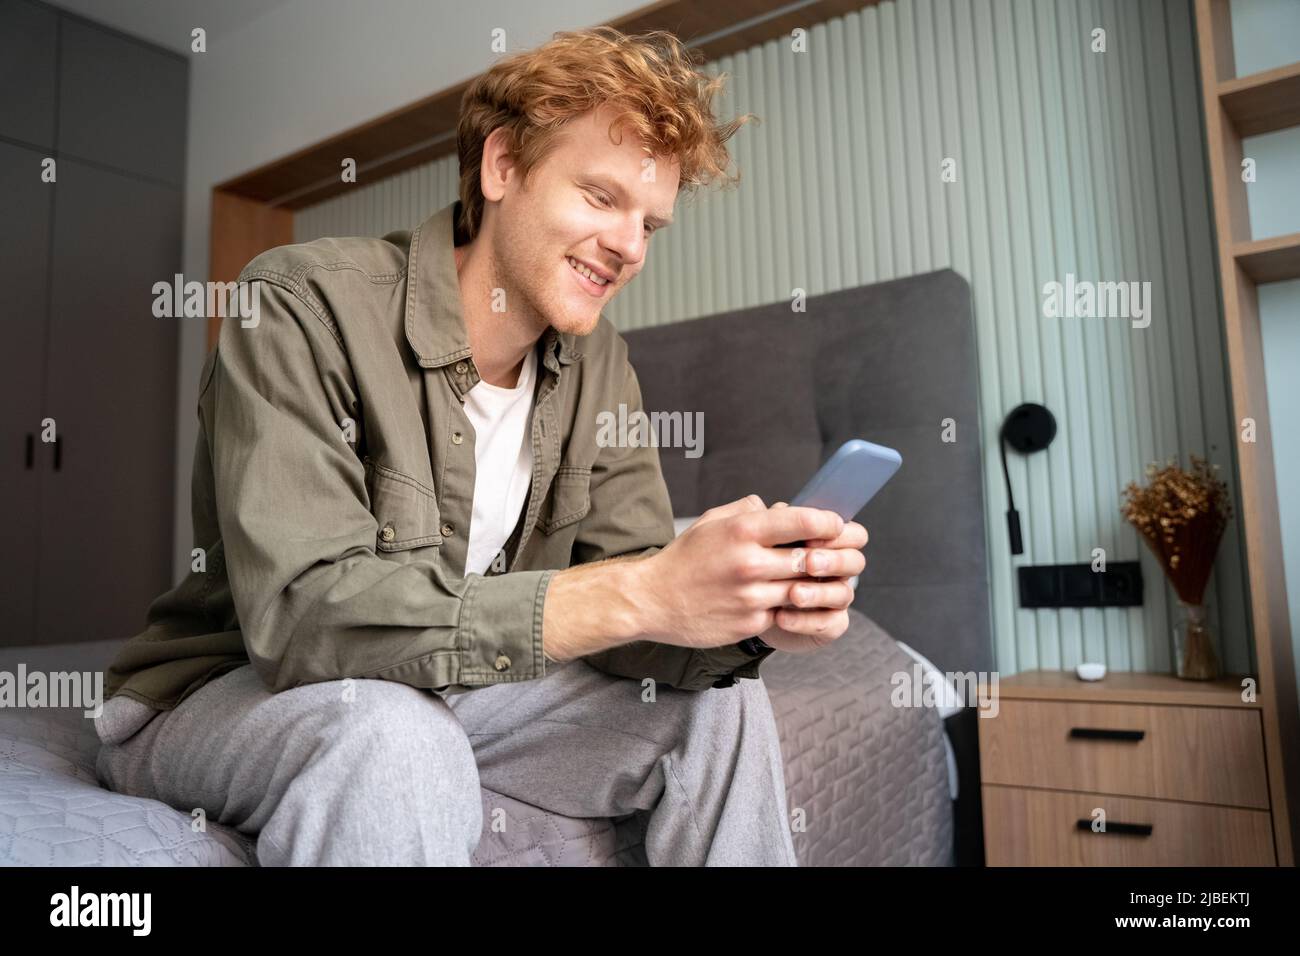 Smiling young adult ginger irish freelance business man using mobile phone Stock Photo